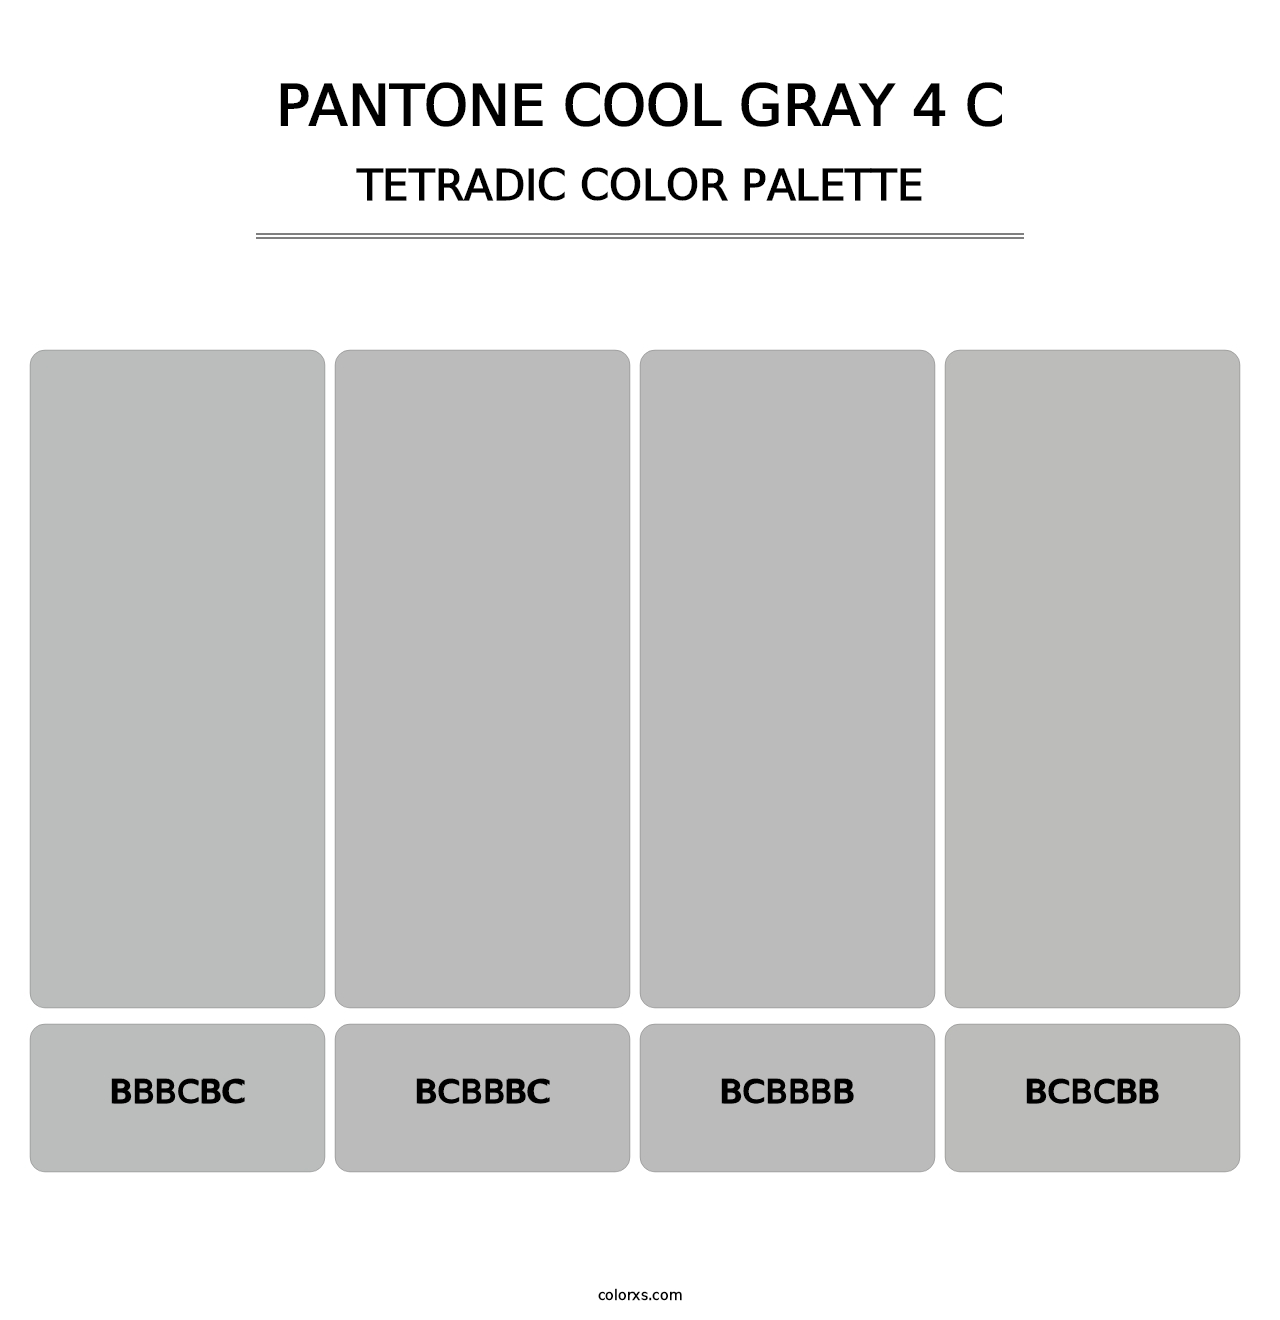 PANTONE Cool Gray 4 C - Tetradic Color Palette